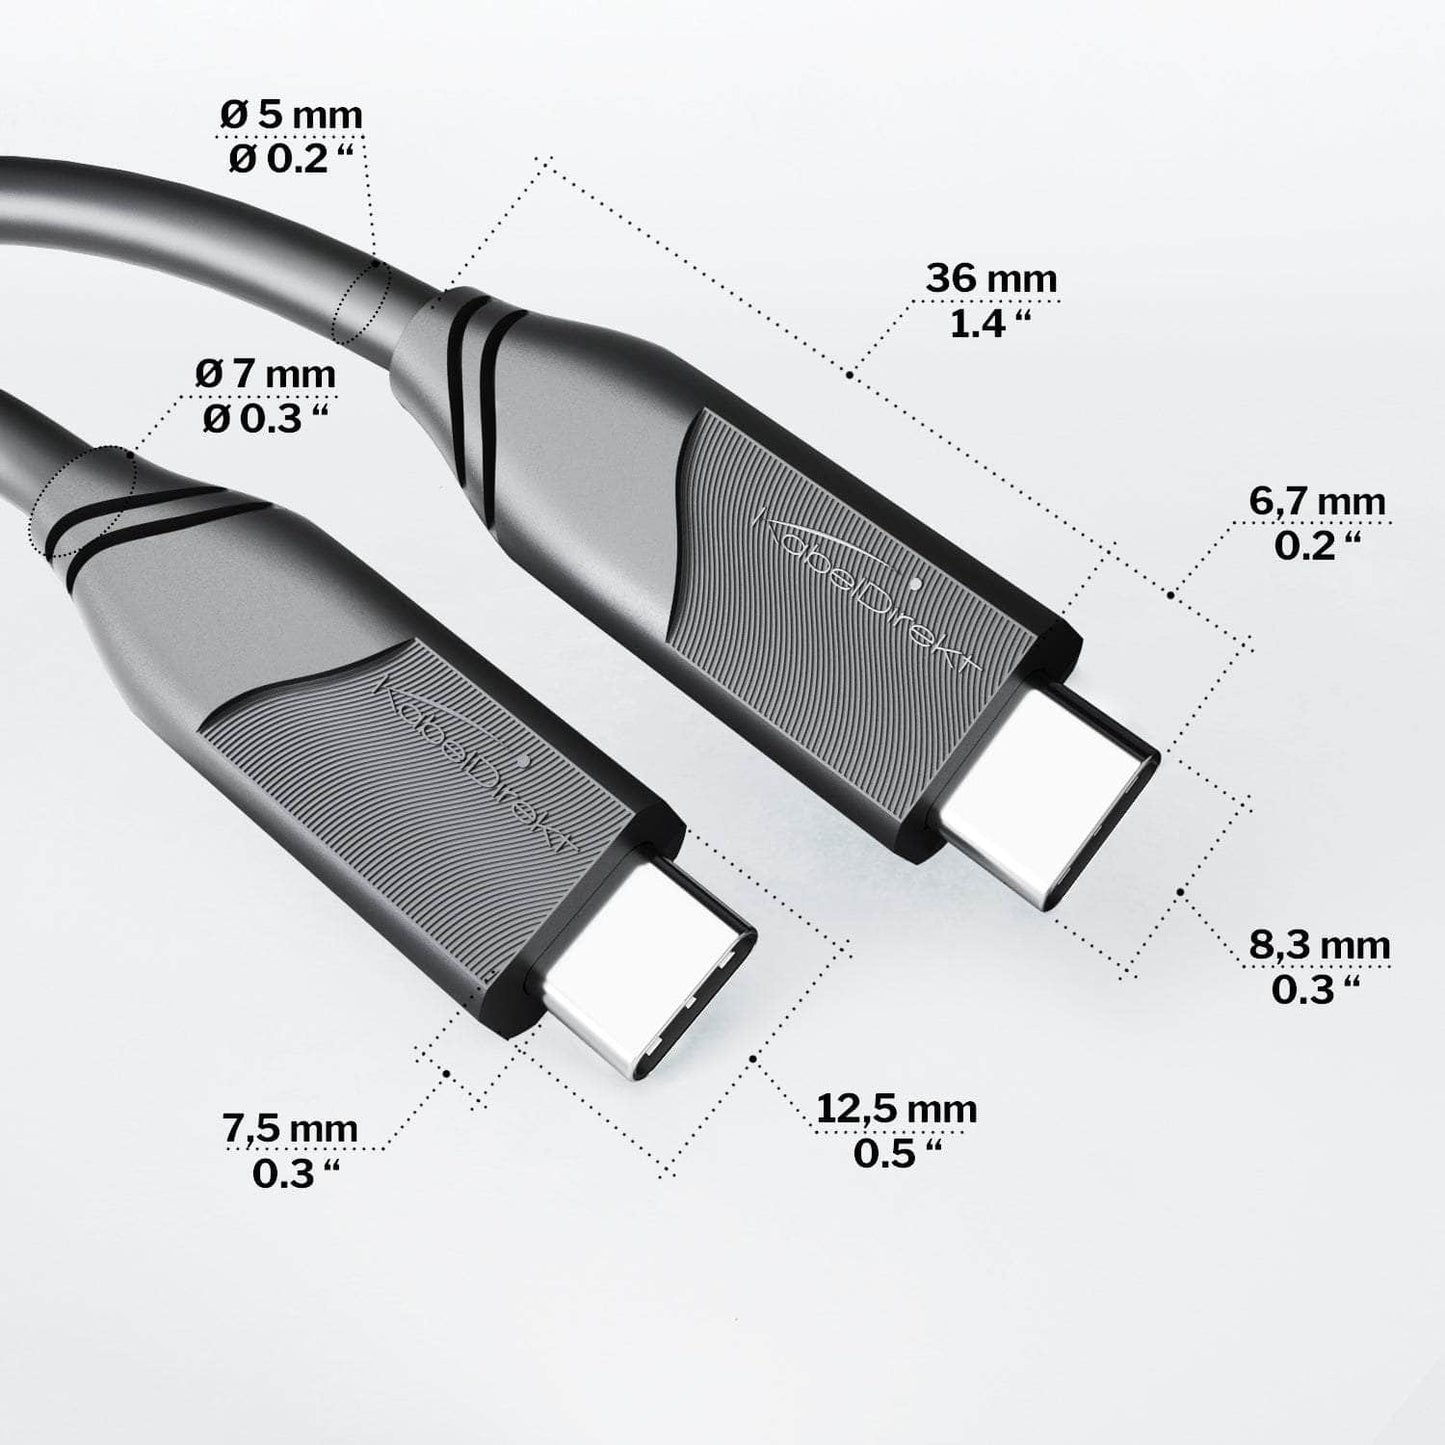 USB-C-Kabel - USB 4.0, Power Delivery 3, Thunderbolt 4, schwarz - 2m